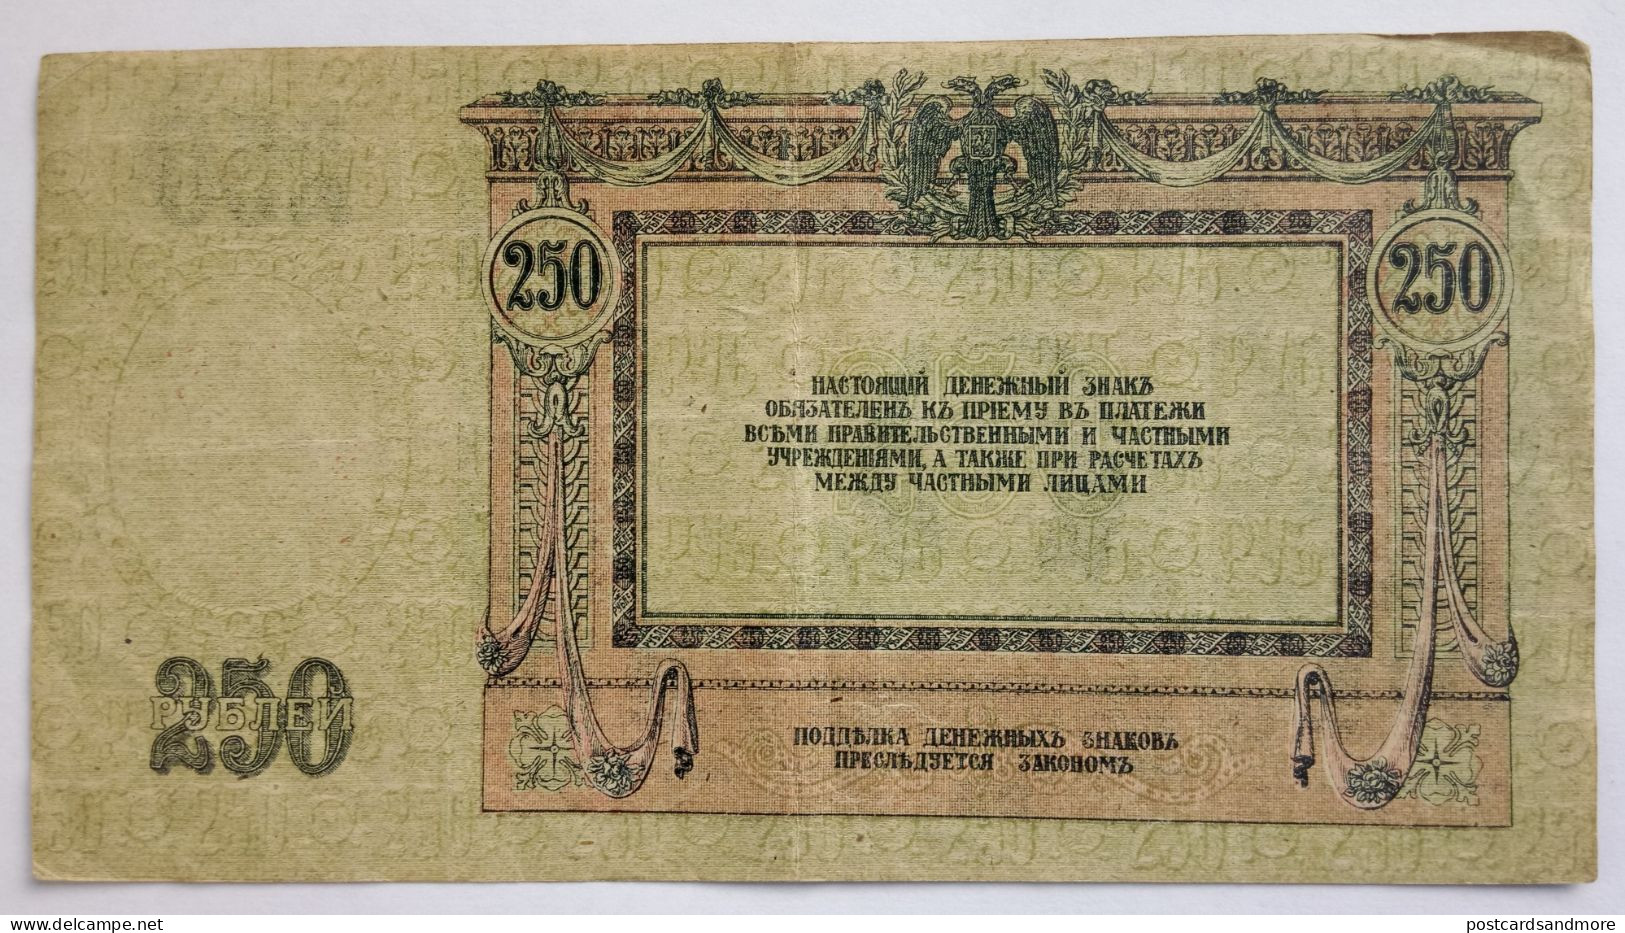 Russia Civil War 1917-1920 lot of 16 banknotes Russia Siberia South Russia Ukraine East Siberia